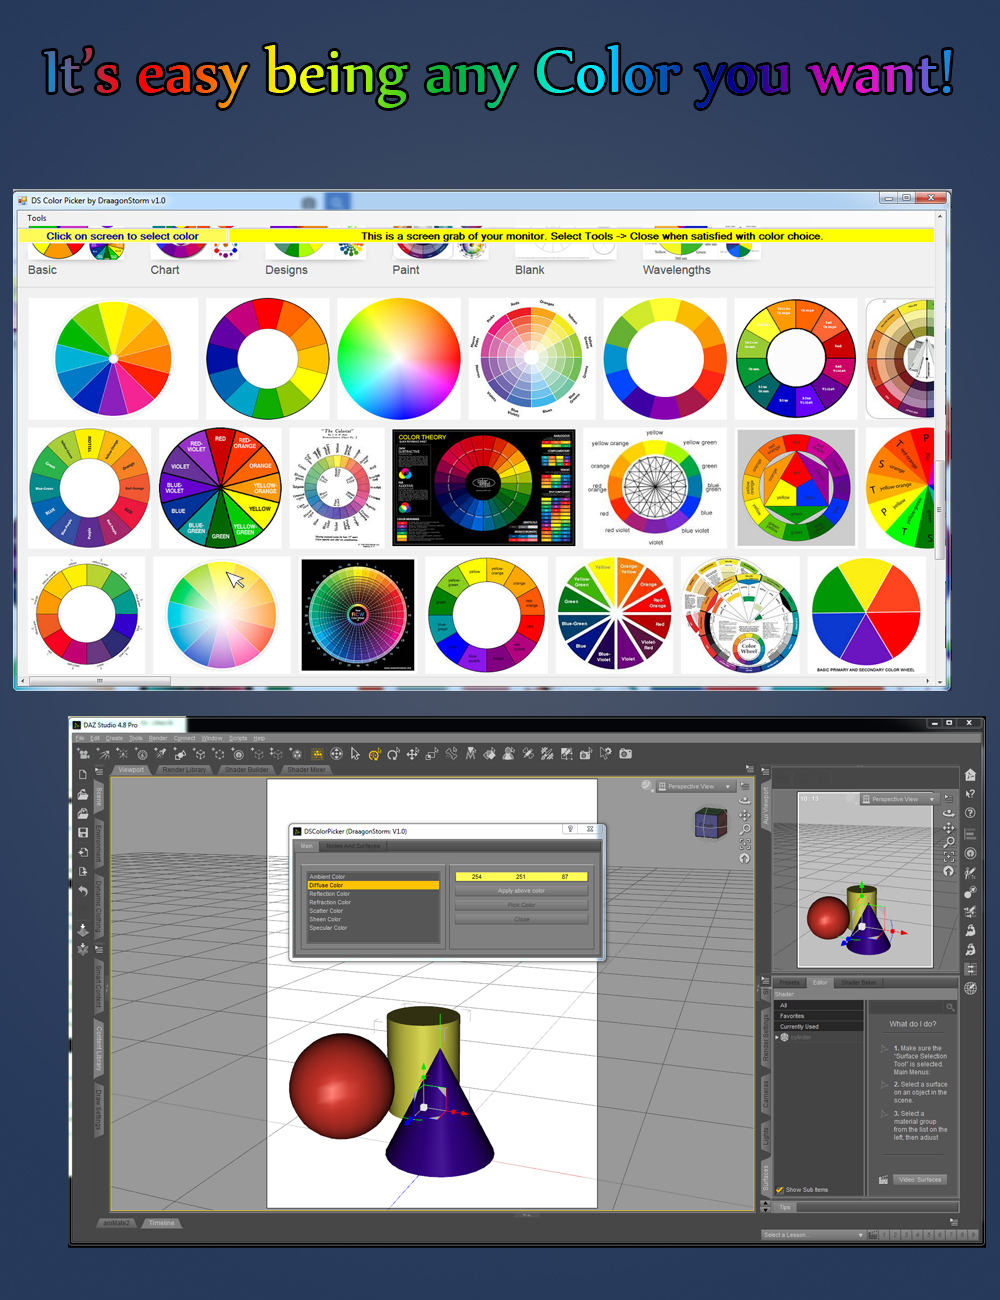 Color Picker for Daz Studio by: DraagonStorm, 3D Models by Daz 3D